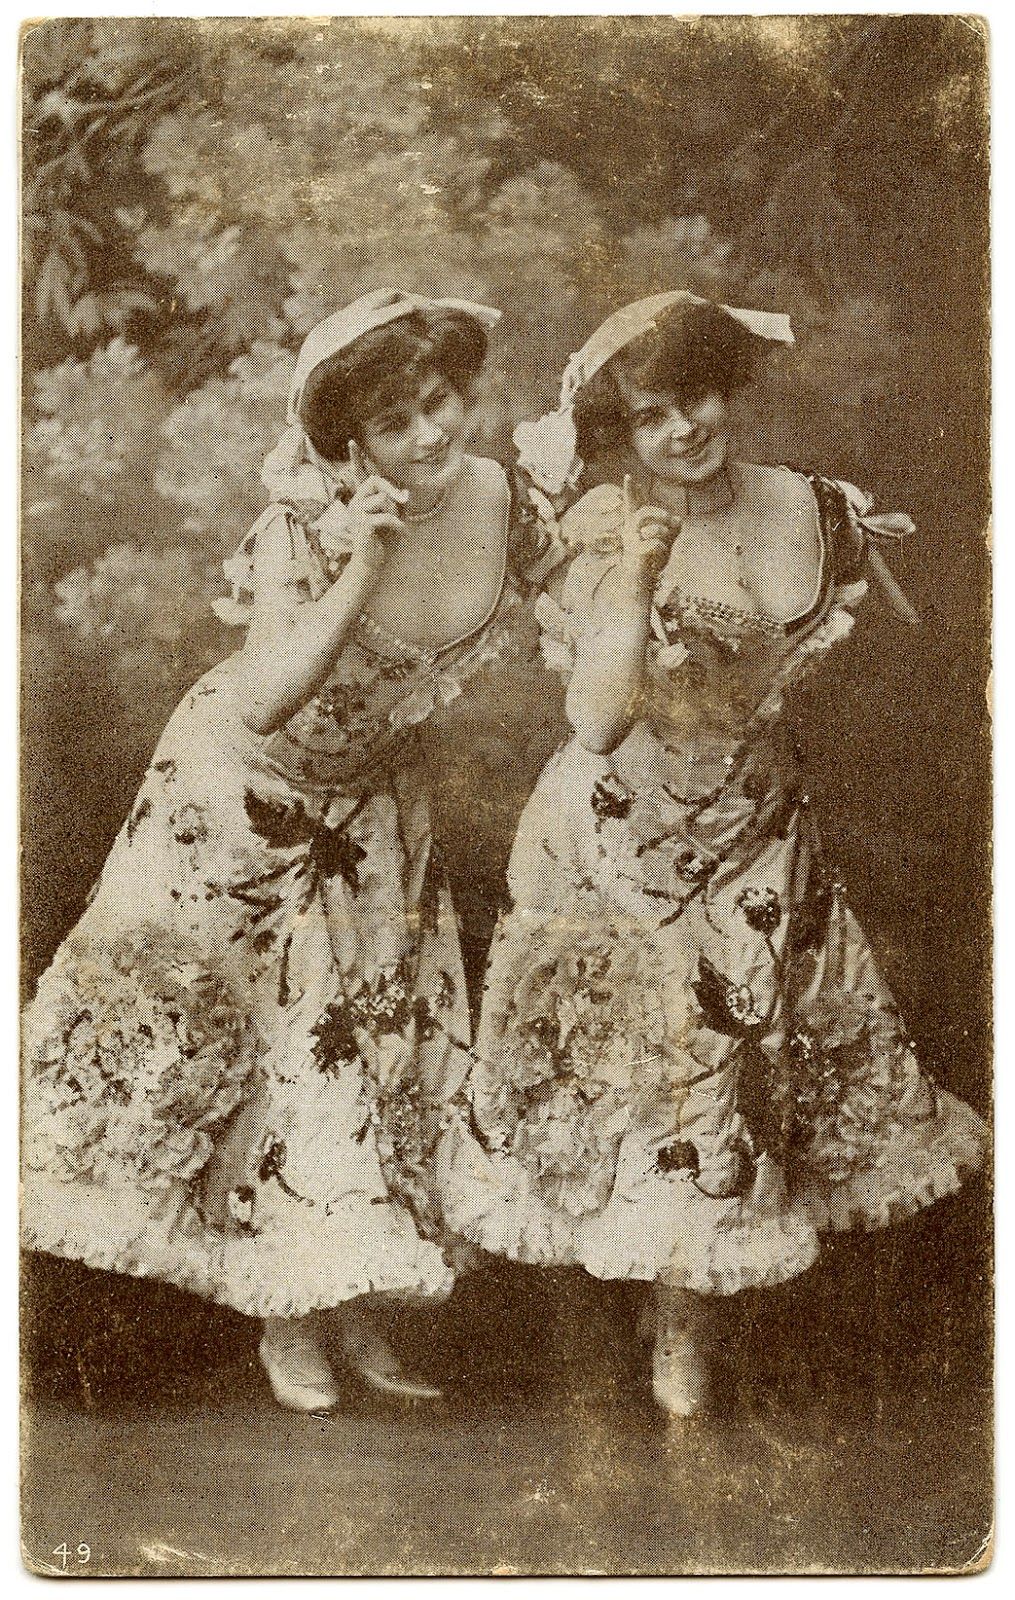 Vintage Burlesque Dancer Photo Graphics Fairy